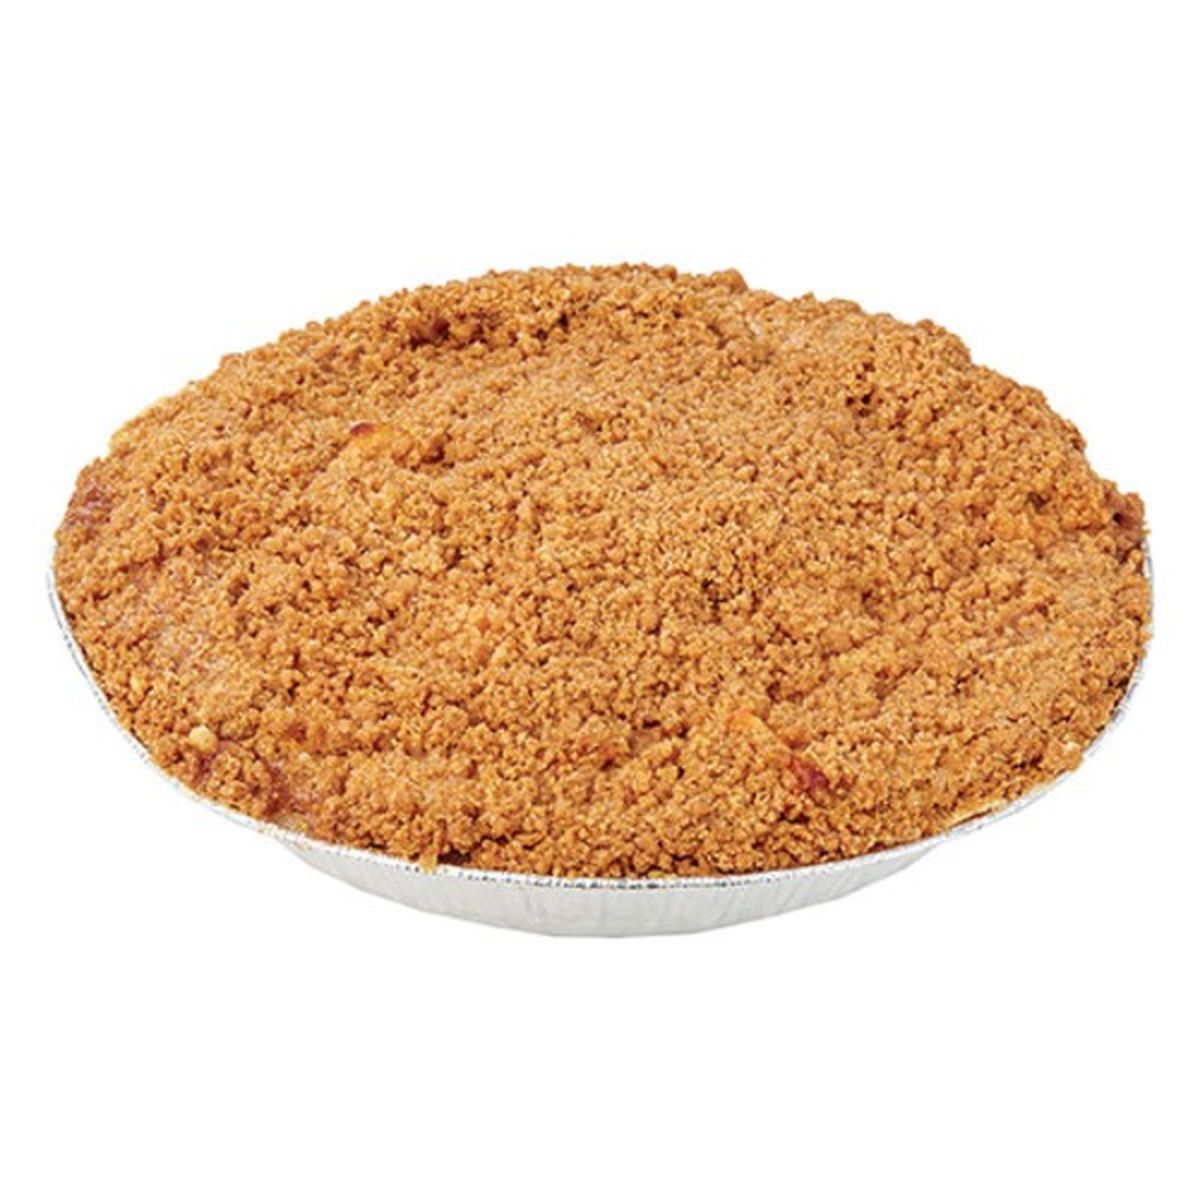 Calories in Wegmans Large Apple Crumb Pie